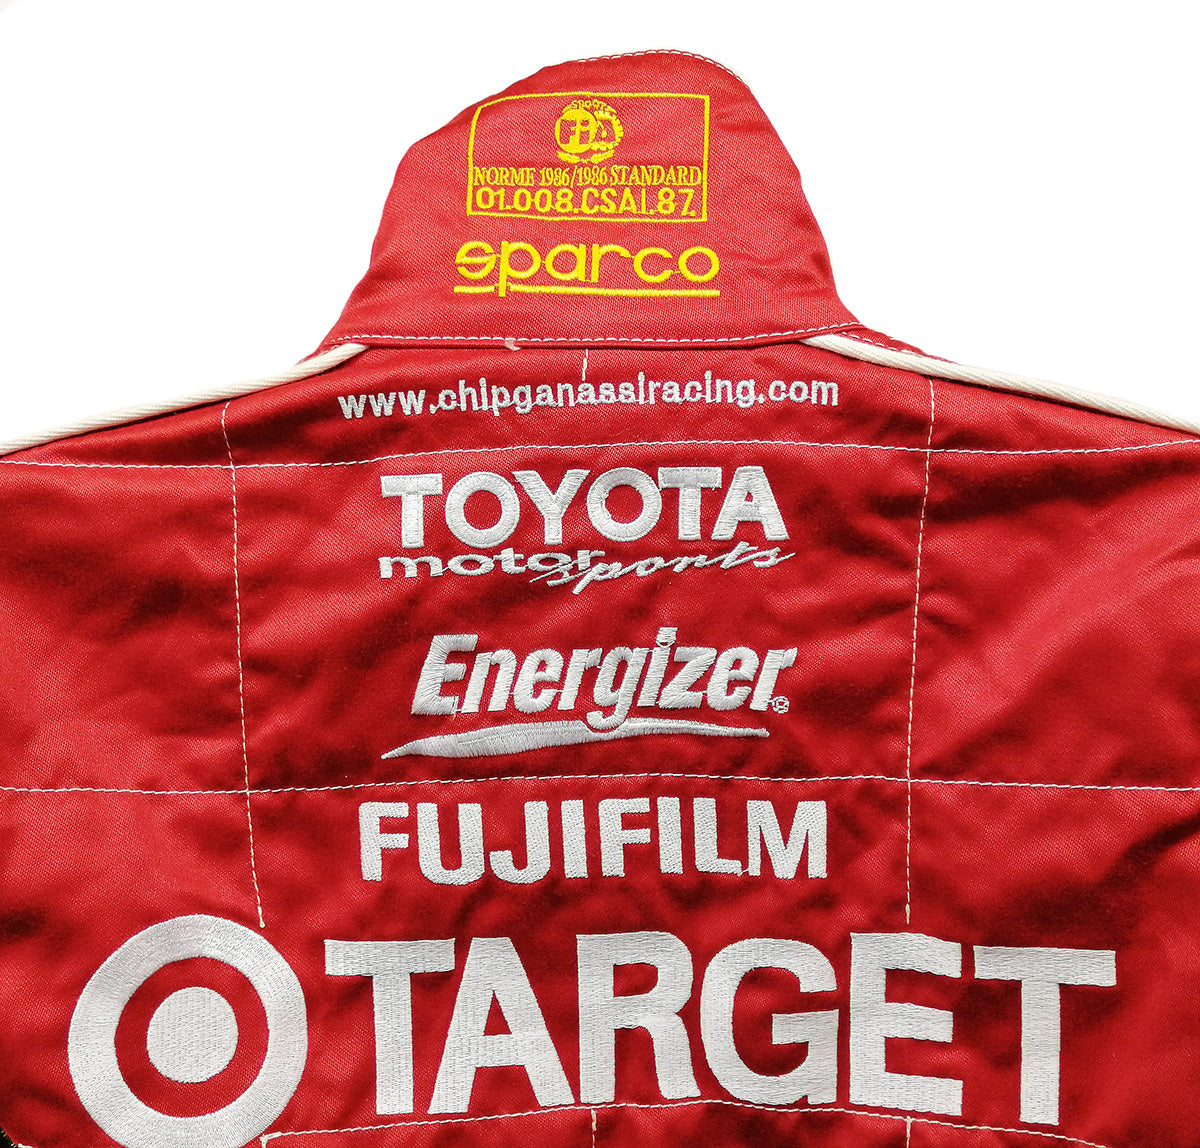 2001 Bruno Junqueira Target Chip Ganassi CART IndyCar Race Worn Suit